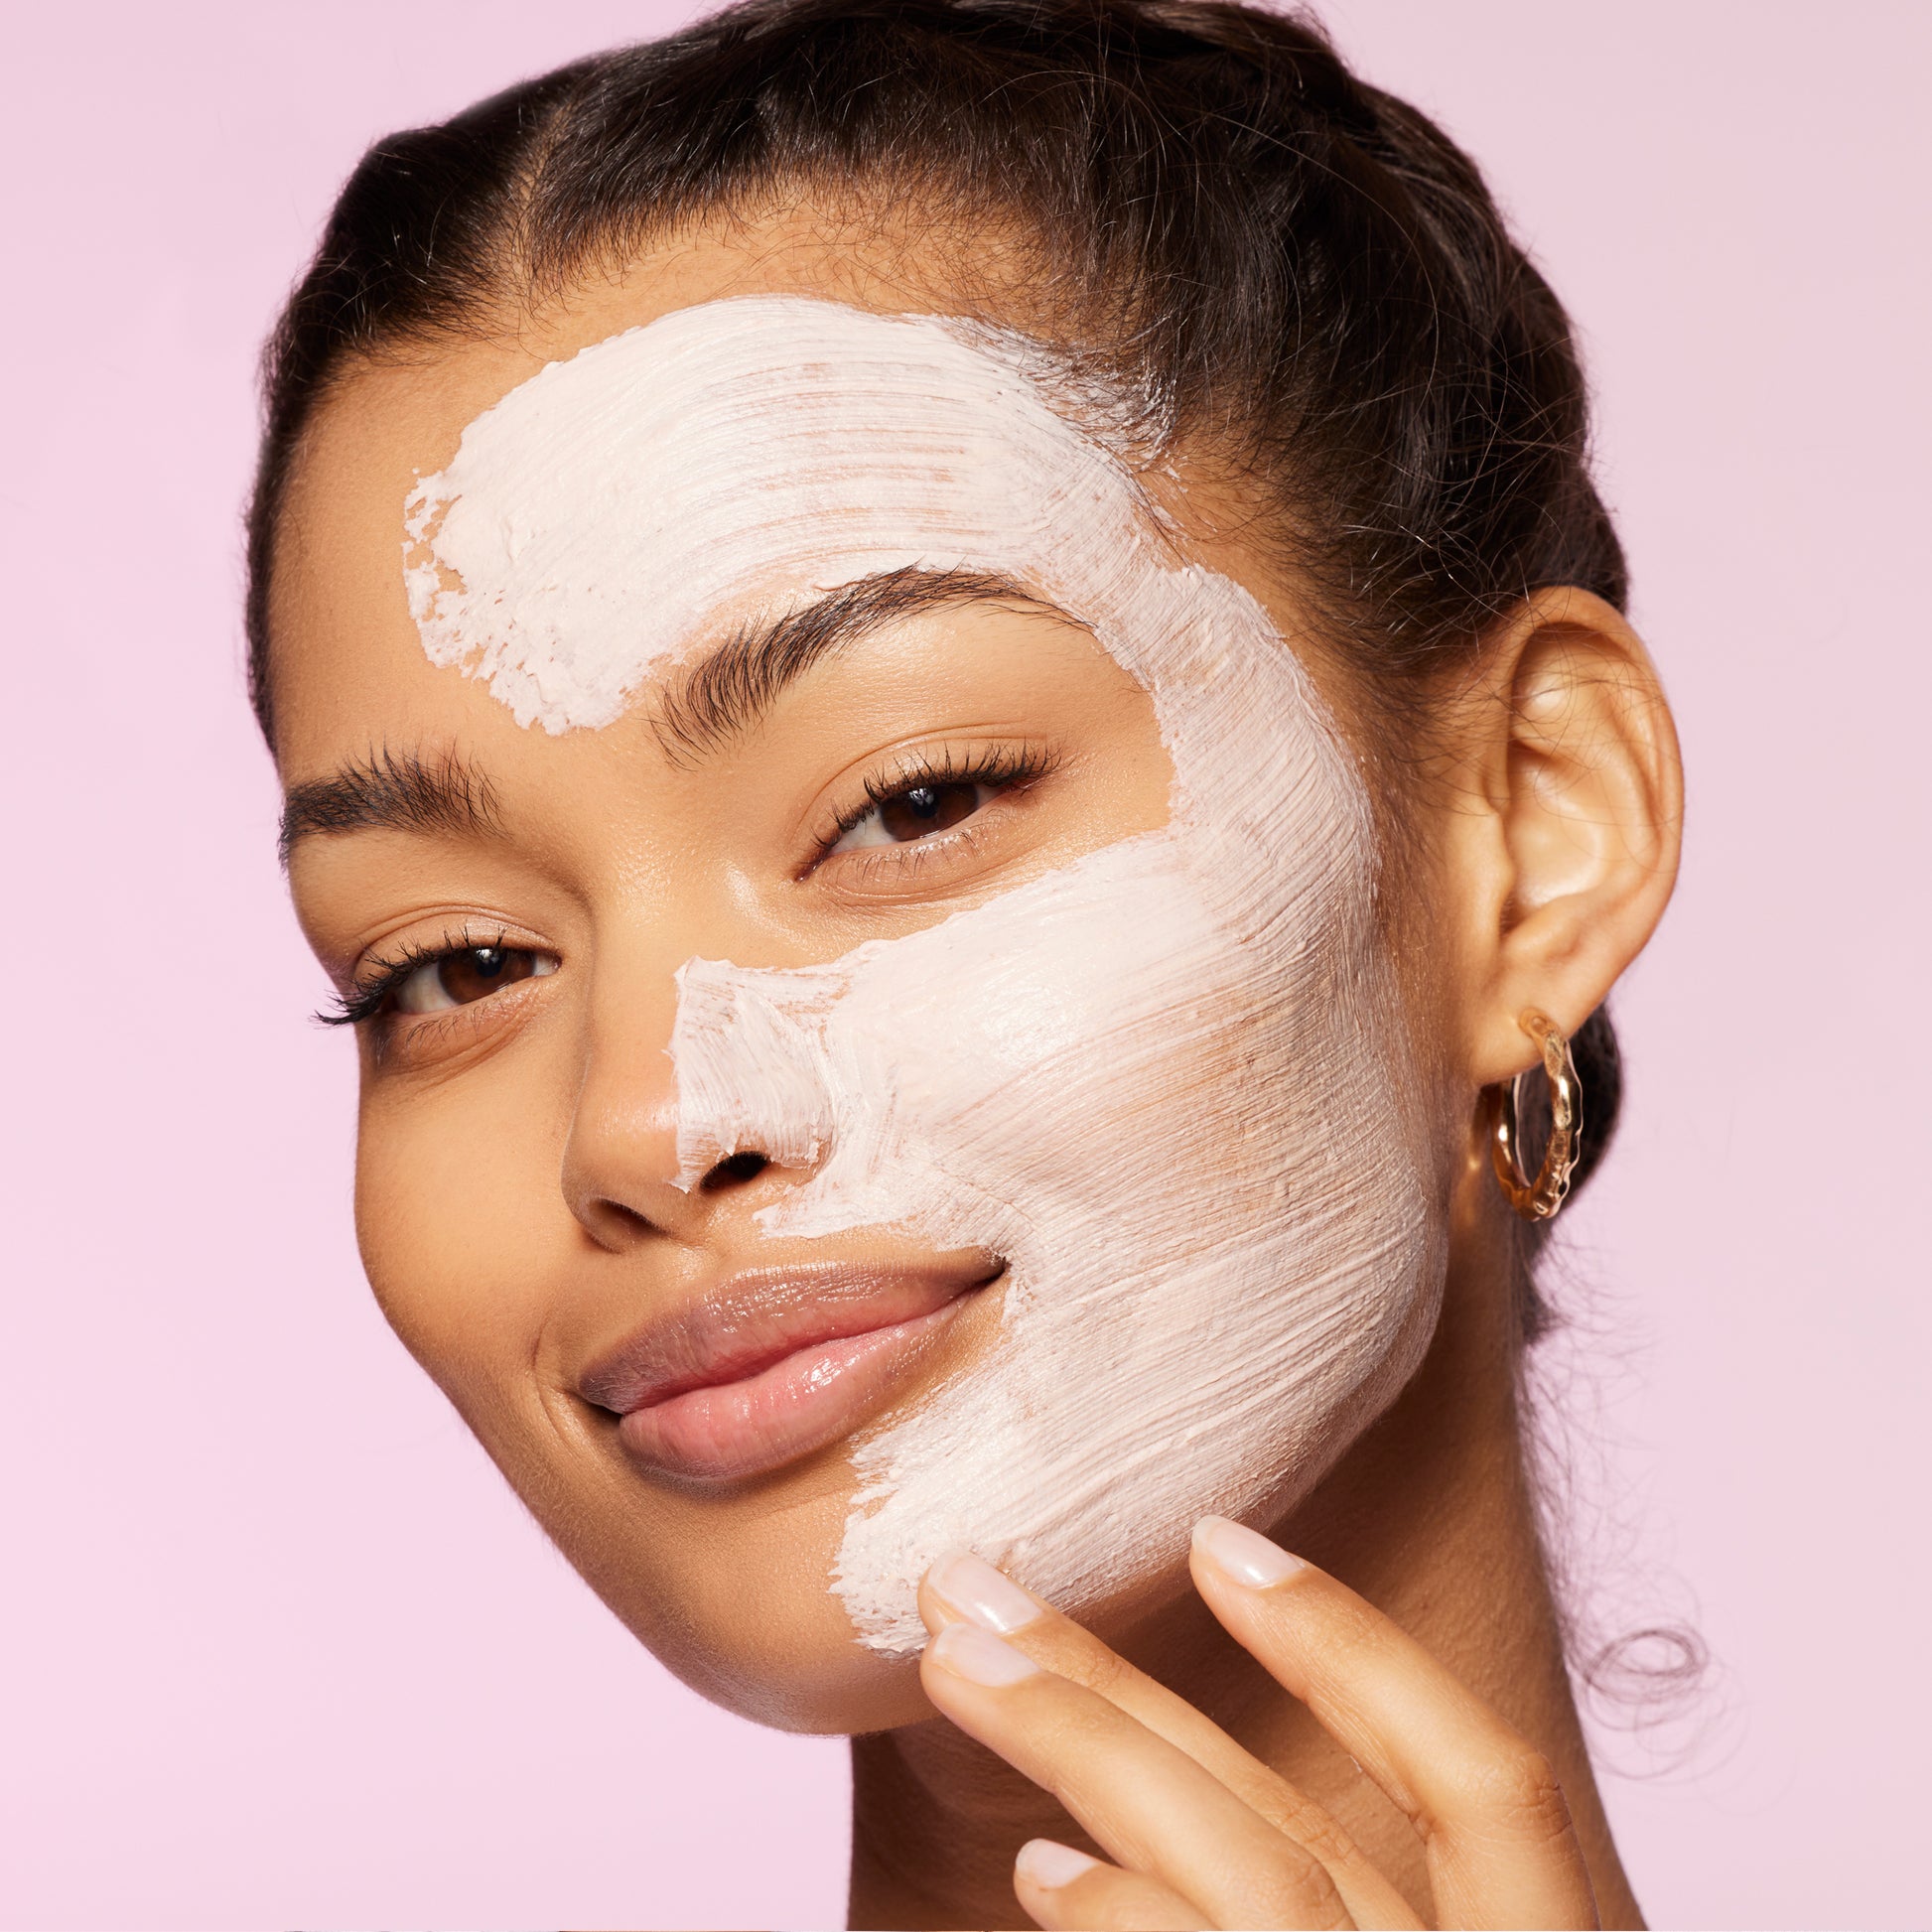 Teenage Skin Salicylic Spot Treatment Kit for acne-prone skin